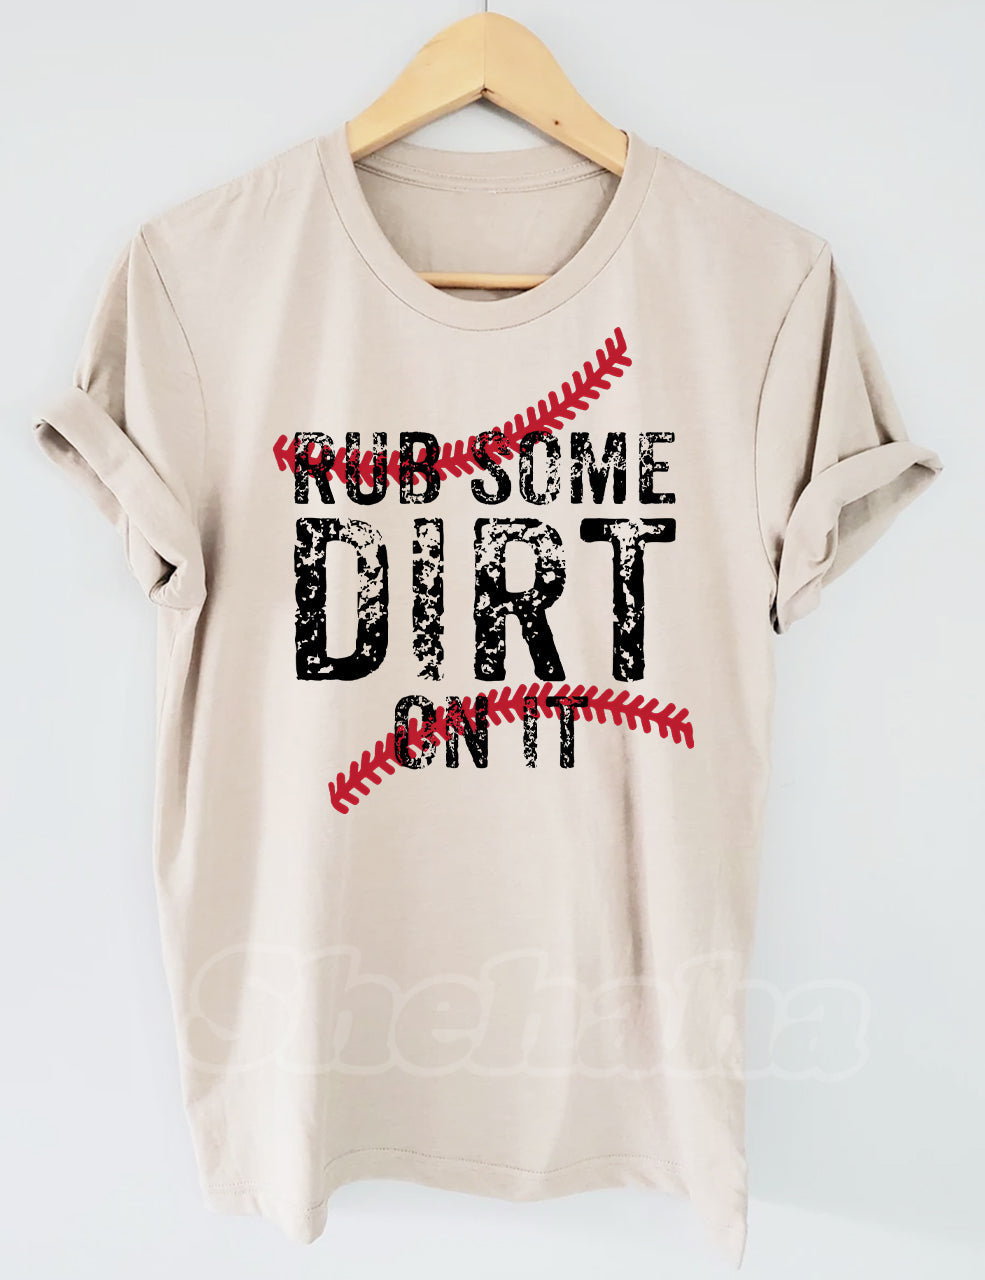 Rub Some Dirt On It Baseball T-shirt